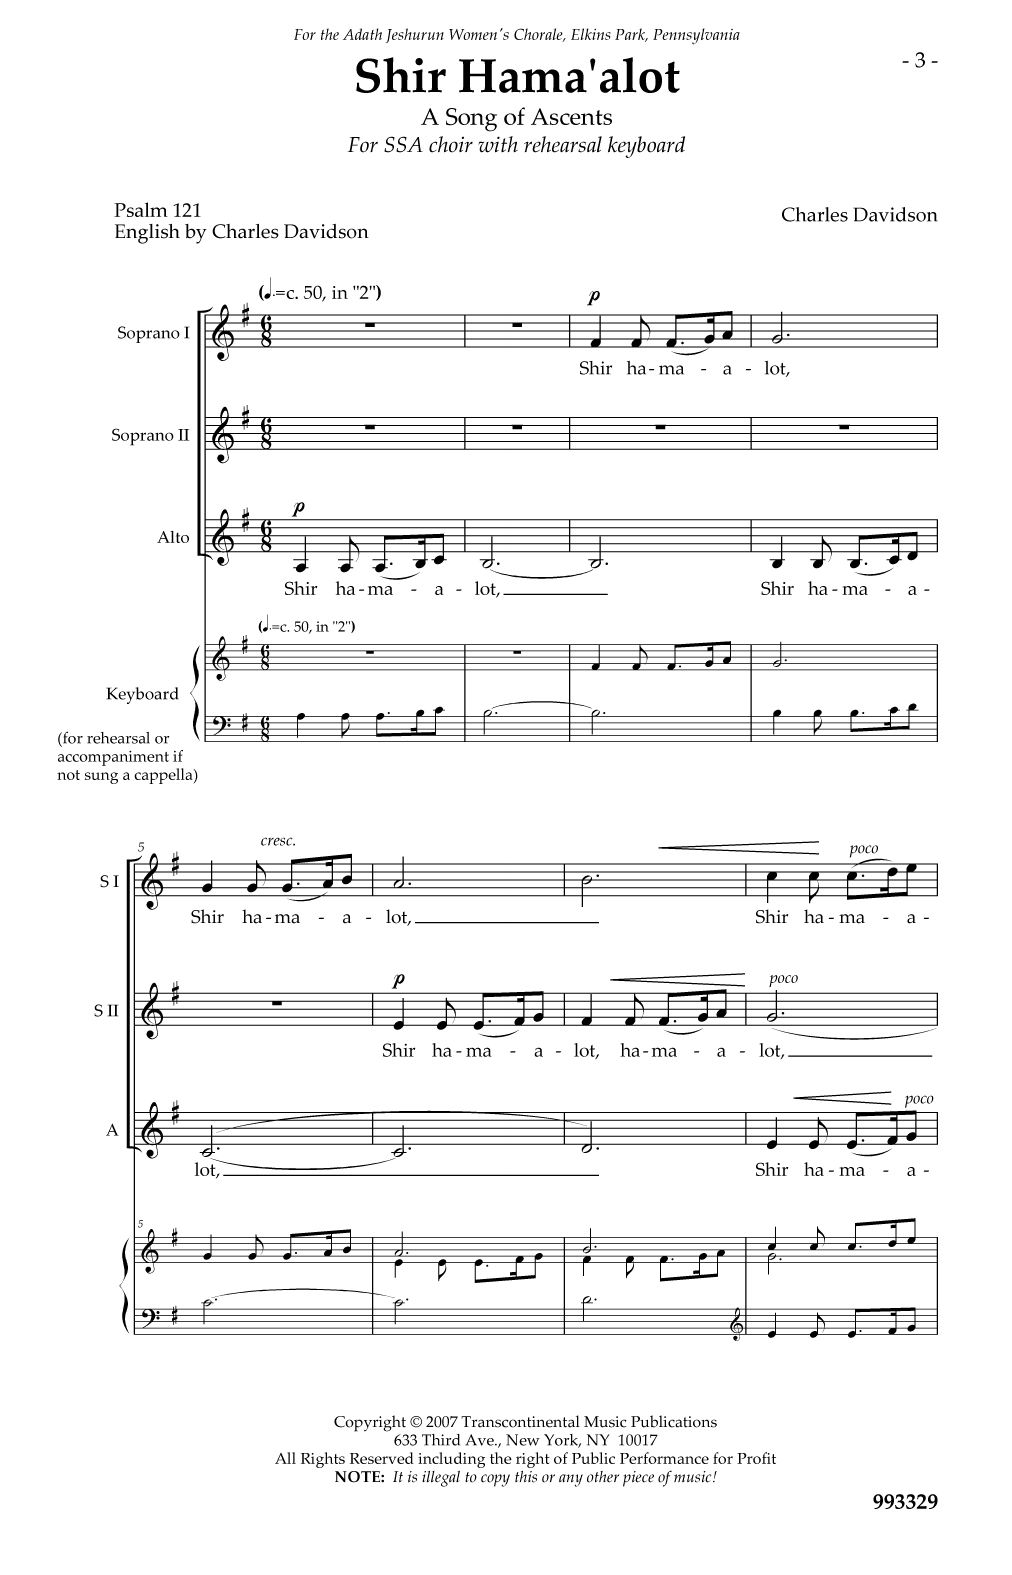 Charles Davidson Shir Hama'alot (A Song of Ascents) Sheet Music Notes & Chords for SSA Choir - Download or Print PDF